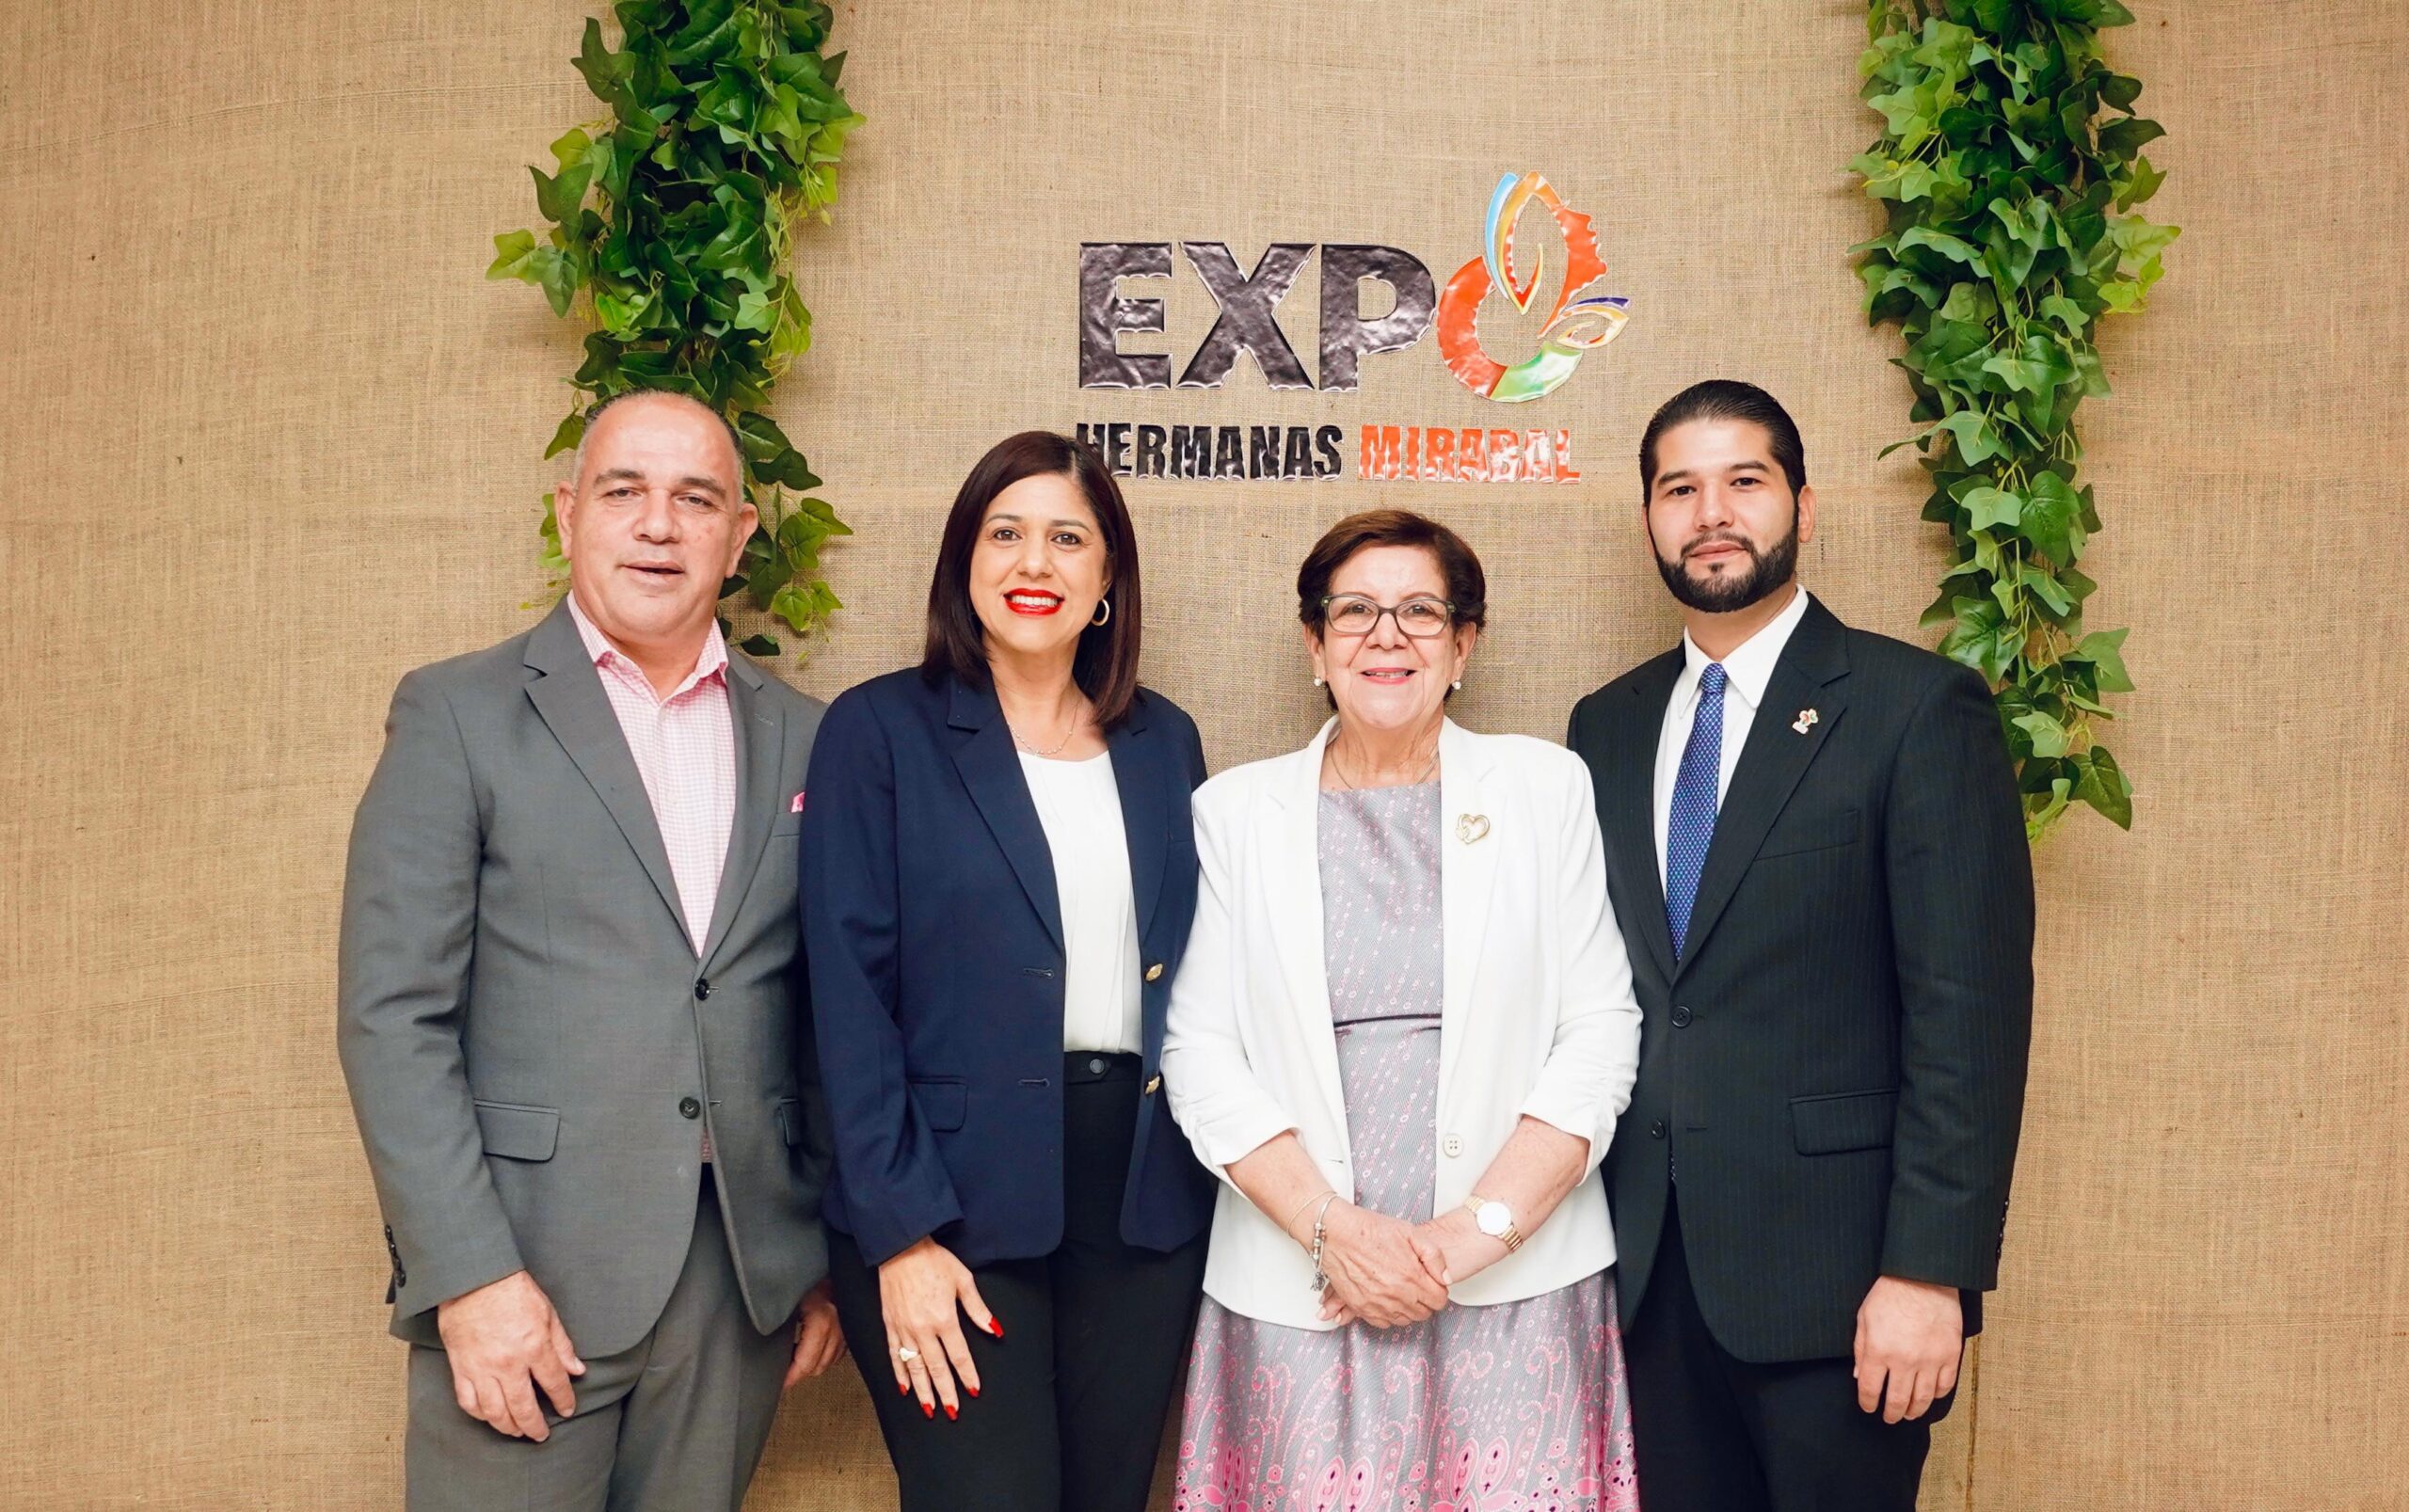 Culmina con éxito Expo Hermanas Mirabal y festival  Cultural  Portada JR230